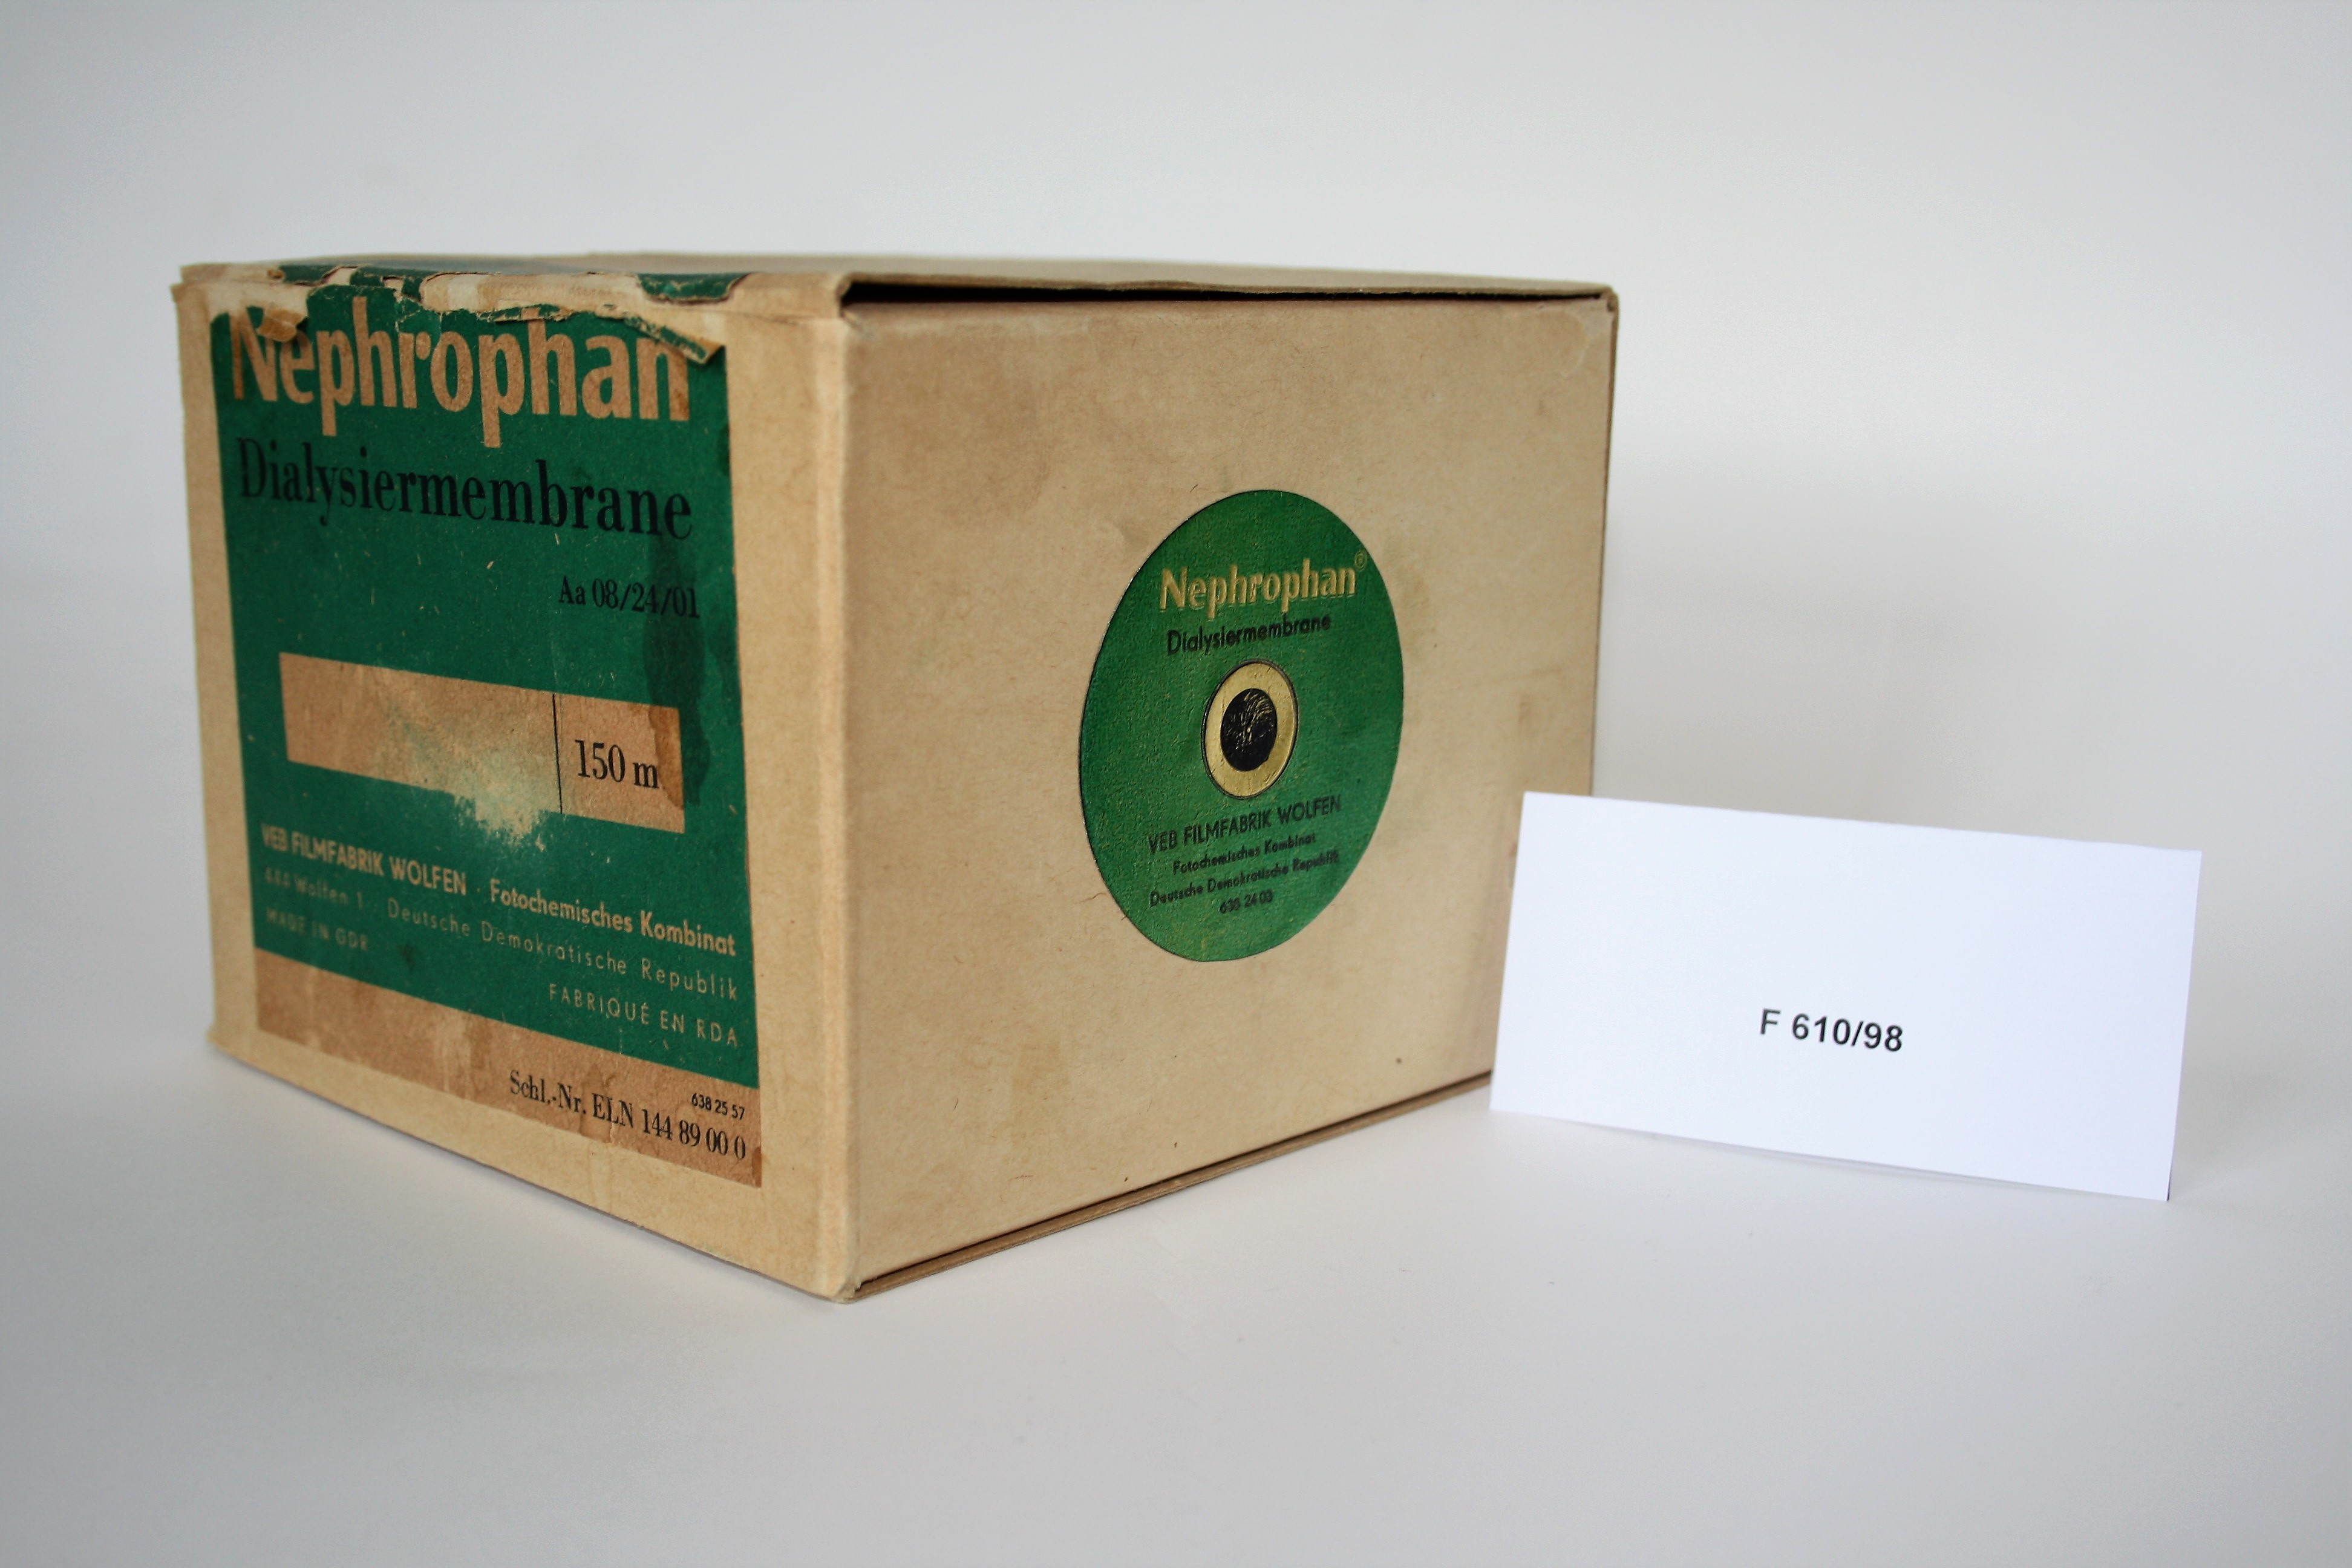 Nephrophan® Dialysiermembrane (Industrie- und Filmmuseum Wolfen CC BY-NC-SA)